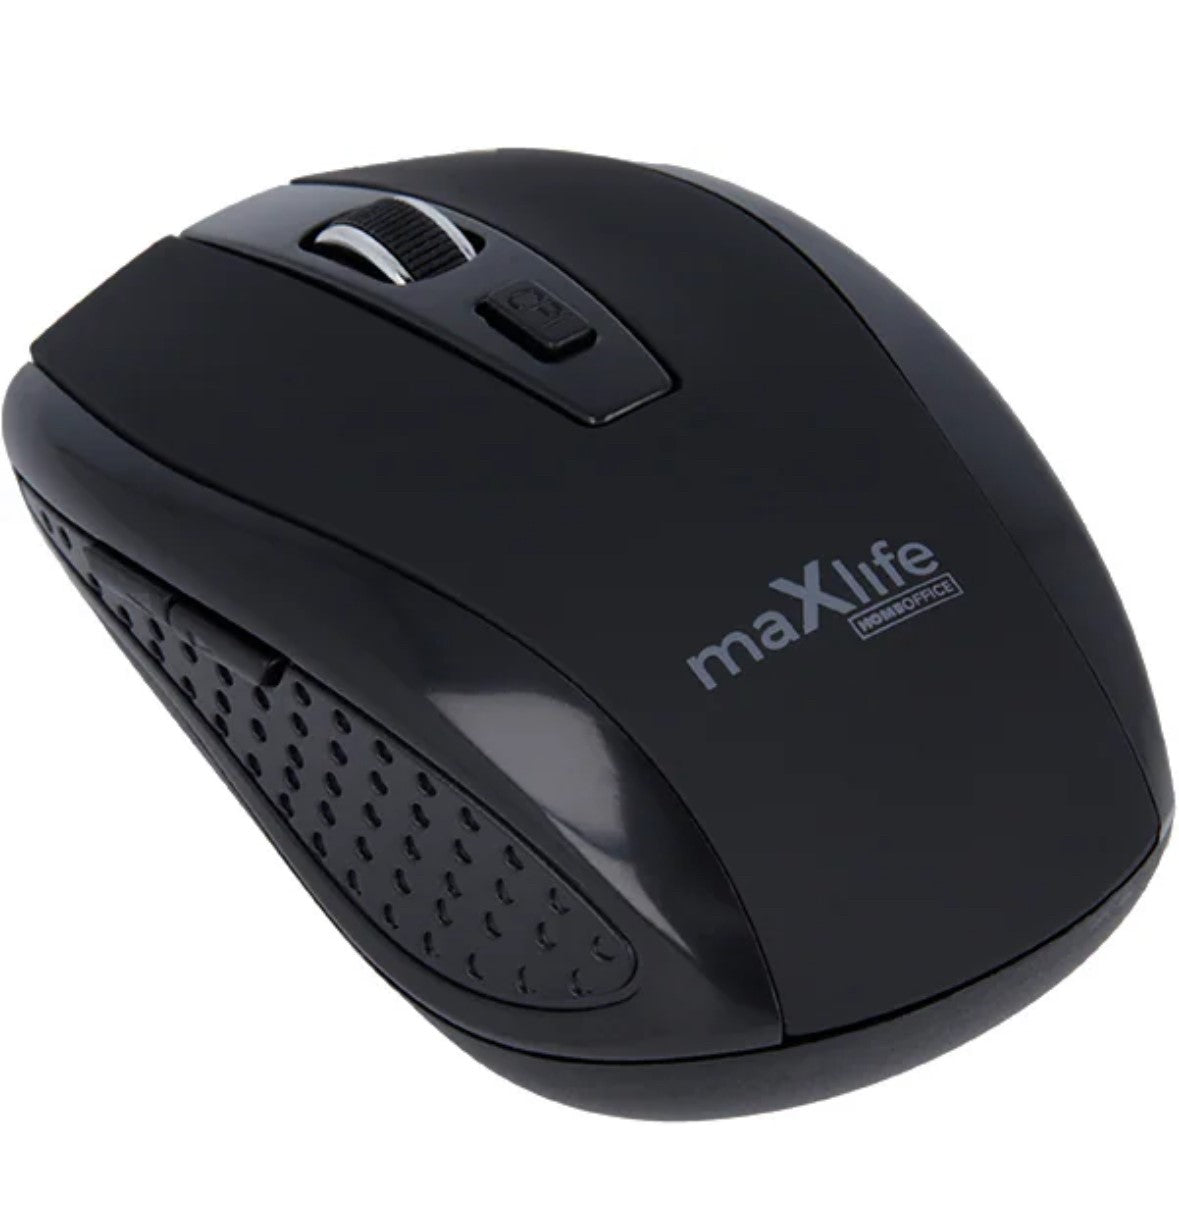 maXlife Optical Wireless Mouse - Black